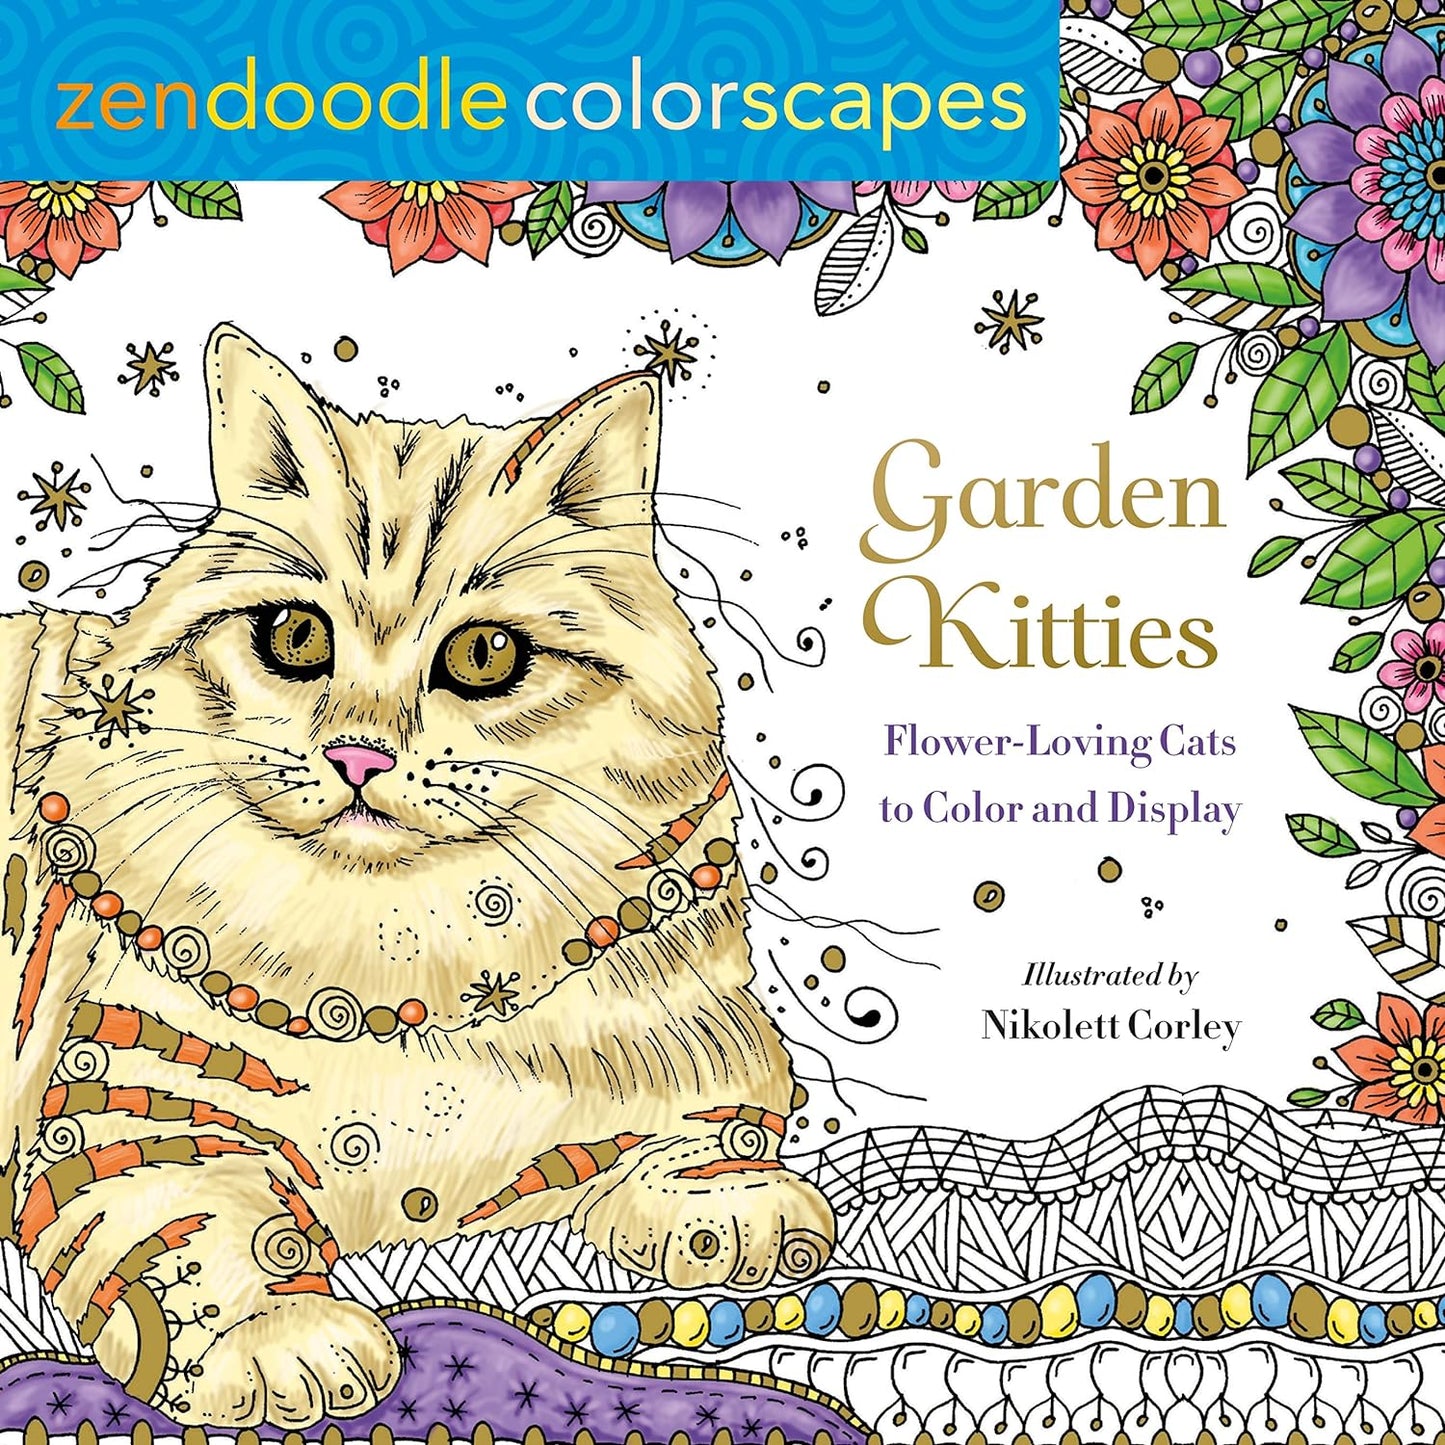 Zendoodle Colorscapes : Garden Kitties